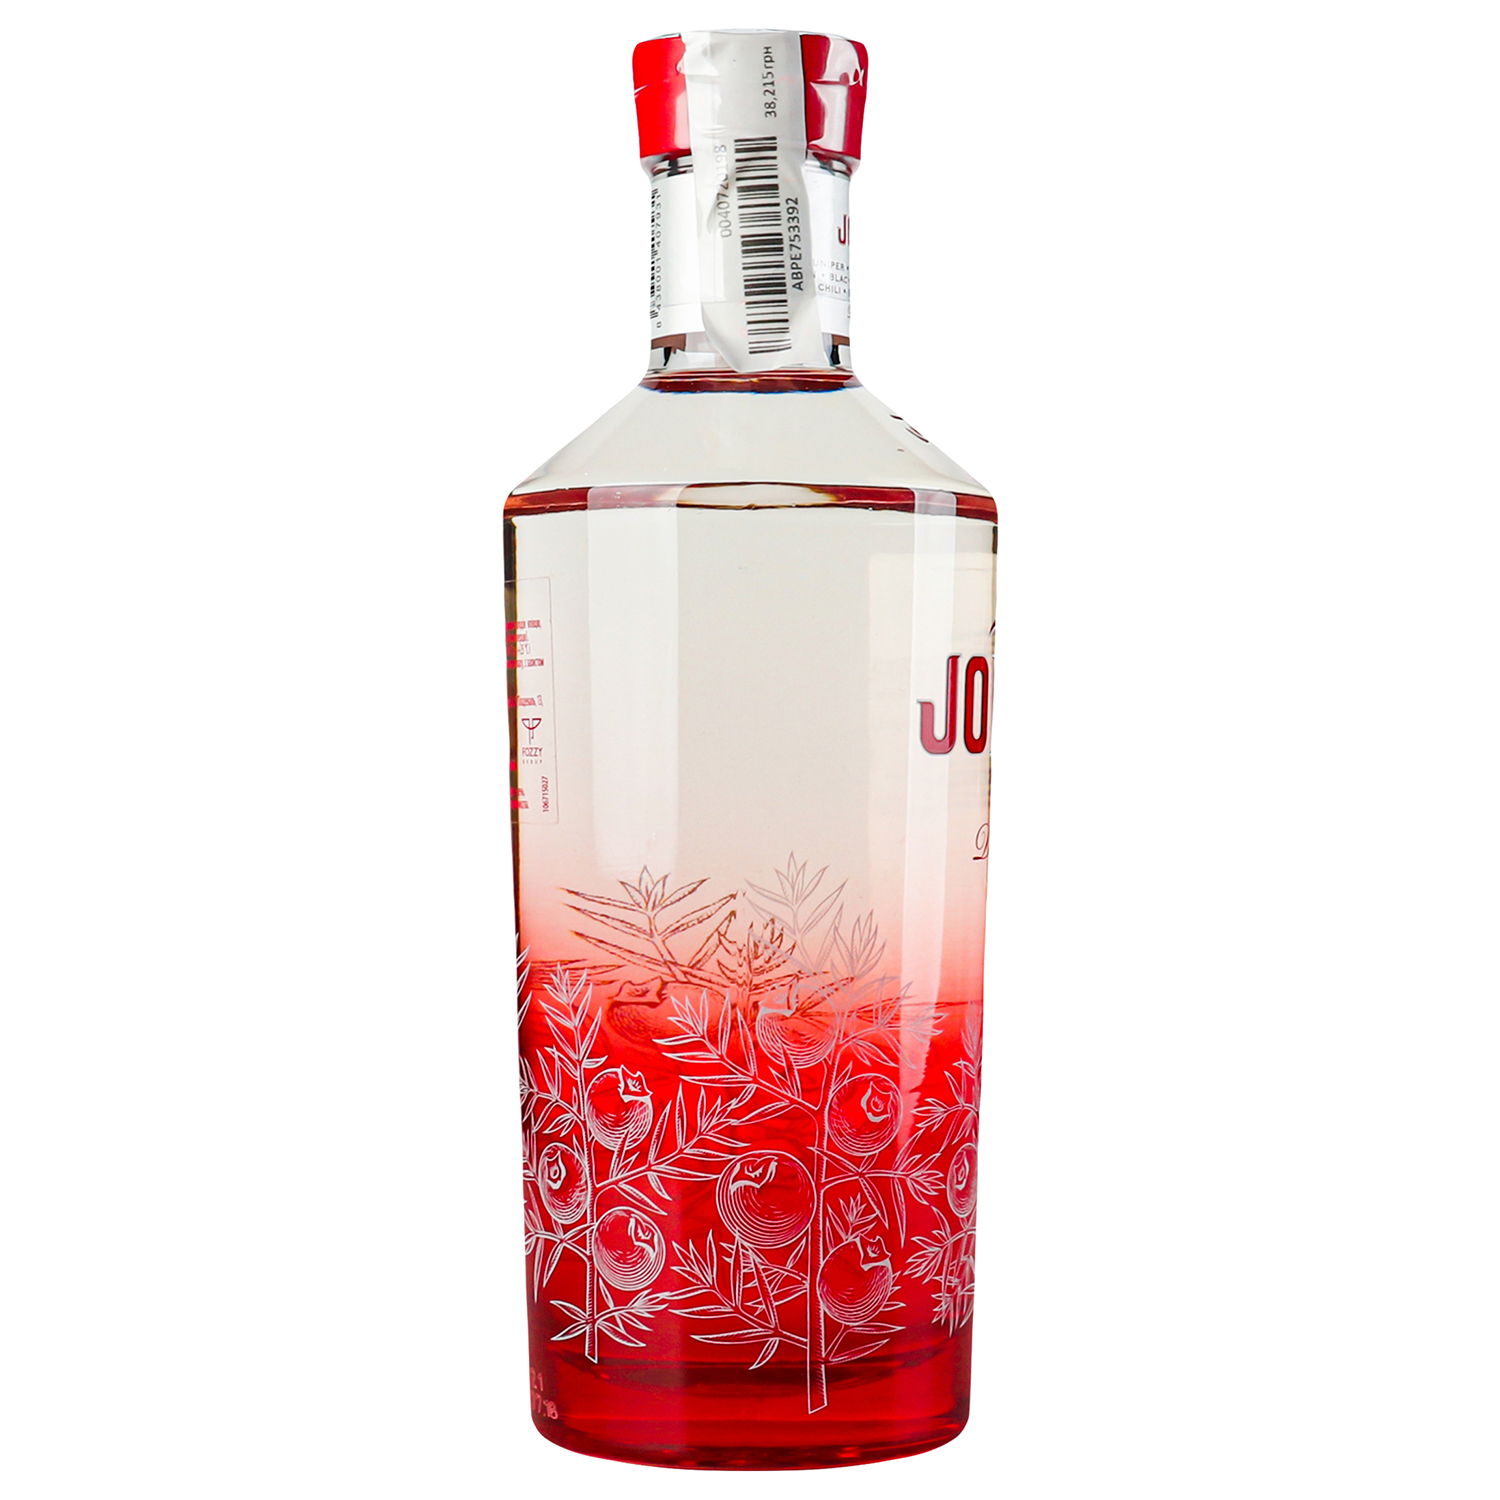 Джин Jodhpur Spicy London Dry Gin, 43%, 0,7 л (826419) - фото 4